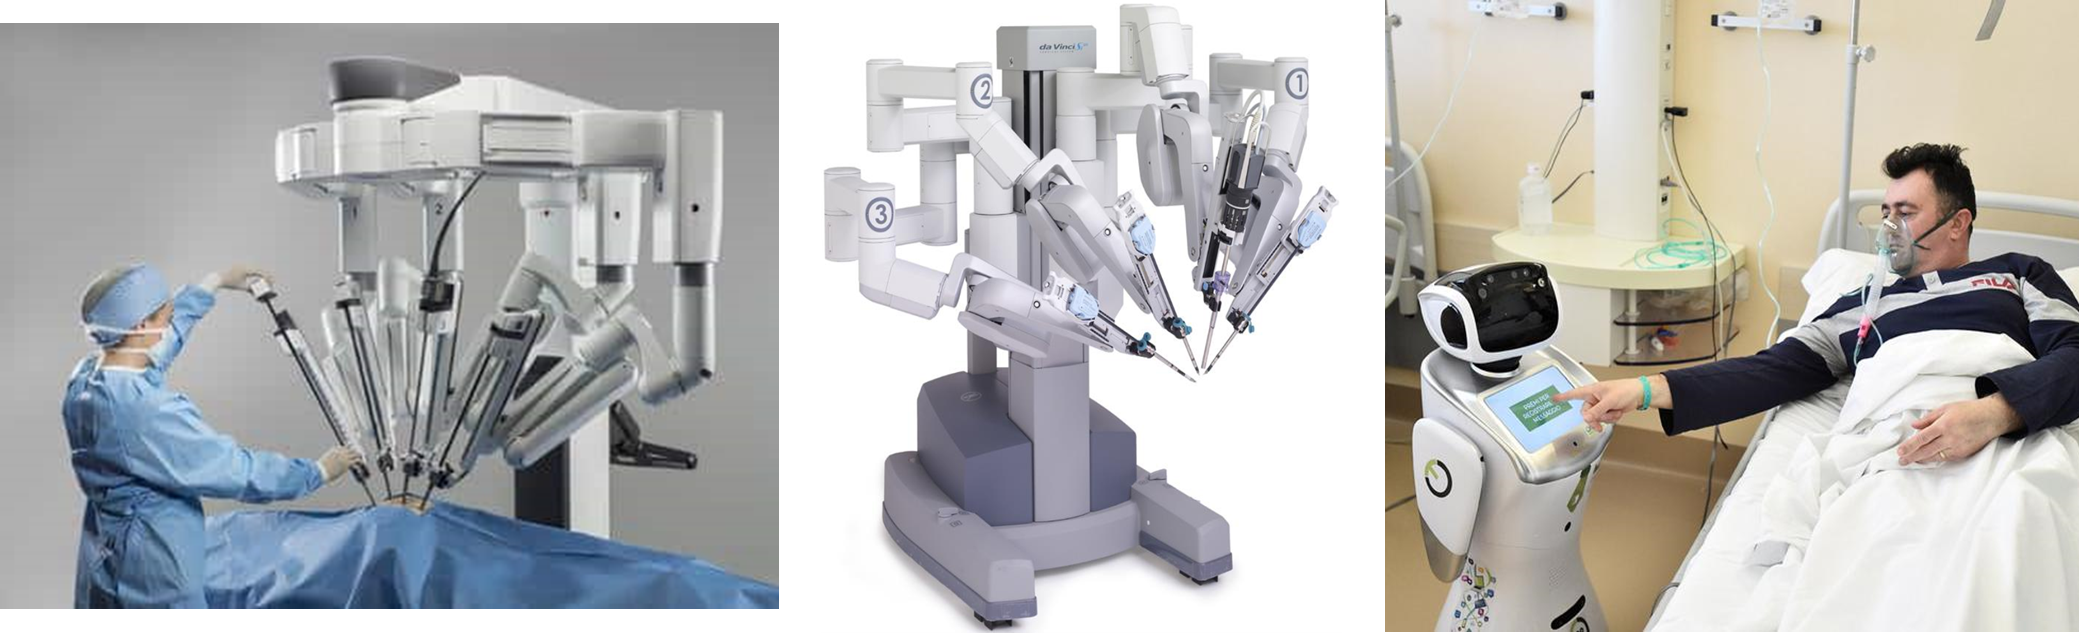 (izquierda y centro) Robot médico utilizados tanto para intervenciones quirúrgicas - Robot Da Vinci ; (derecha) Robot médico utilizado para cuidado de pacientes - Tommy, the robot nurse (Circolo hospital).